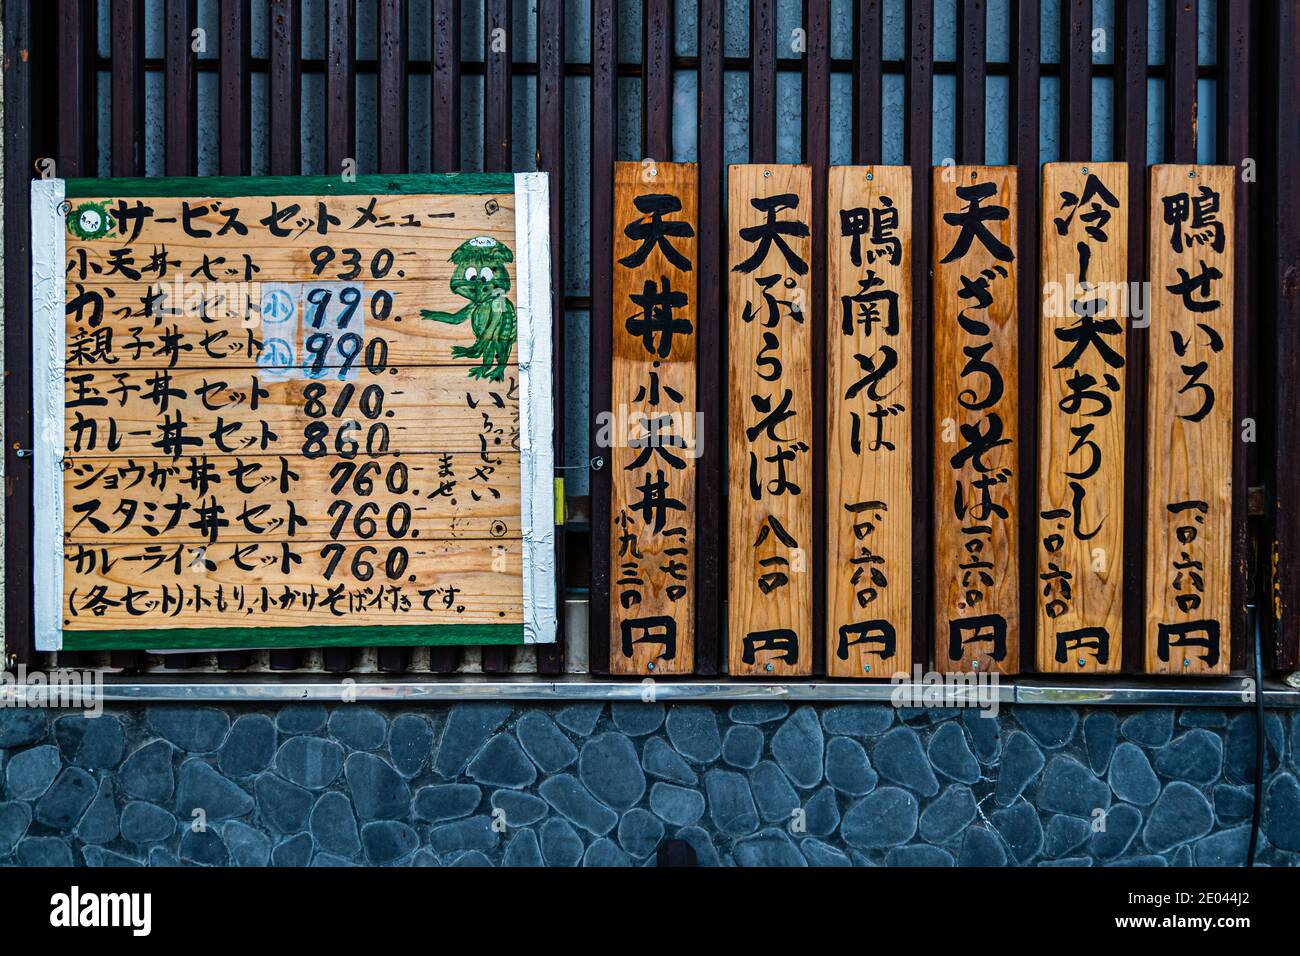 Menu in Japanese script in Tokyo, Taito, Japan Stock Photo